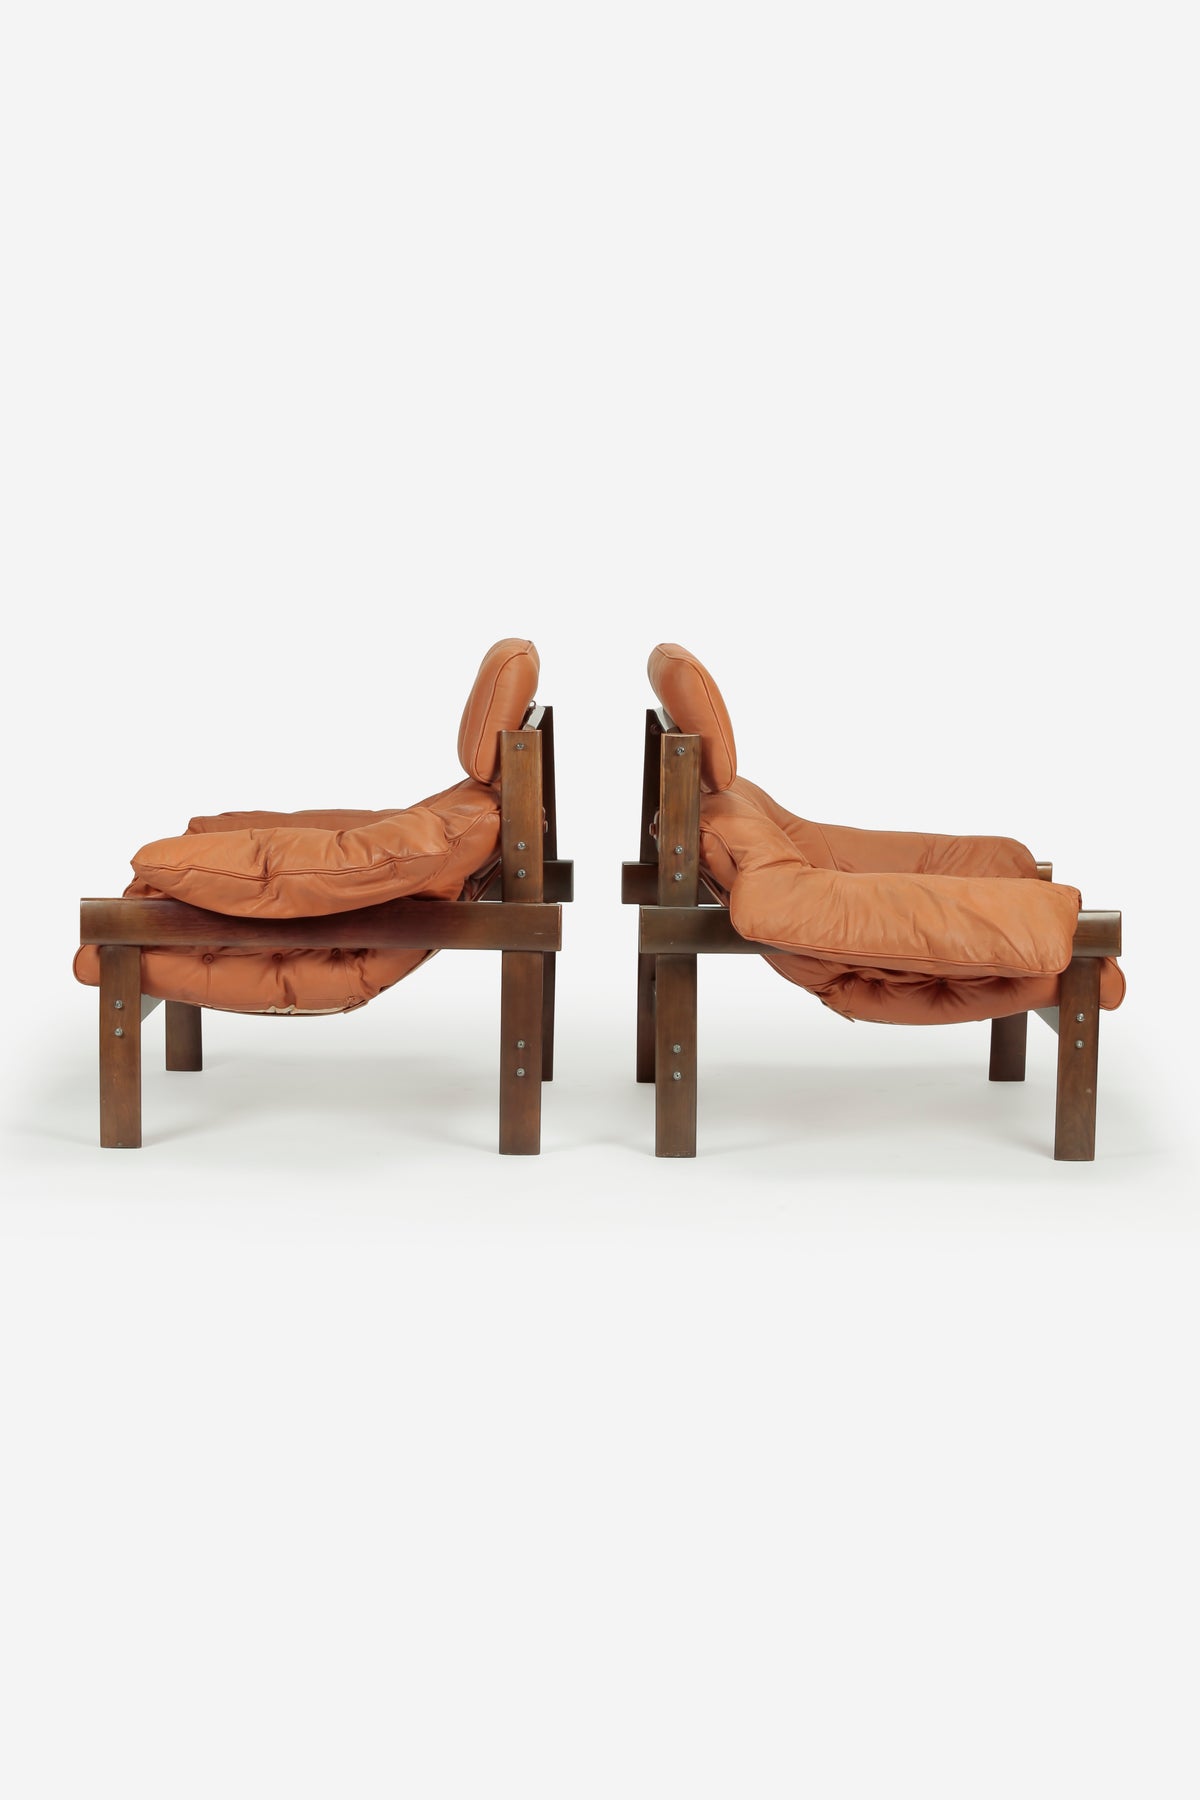 2 Parcival Lafer Lounge Chairs Brasilien 60'er